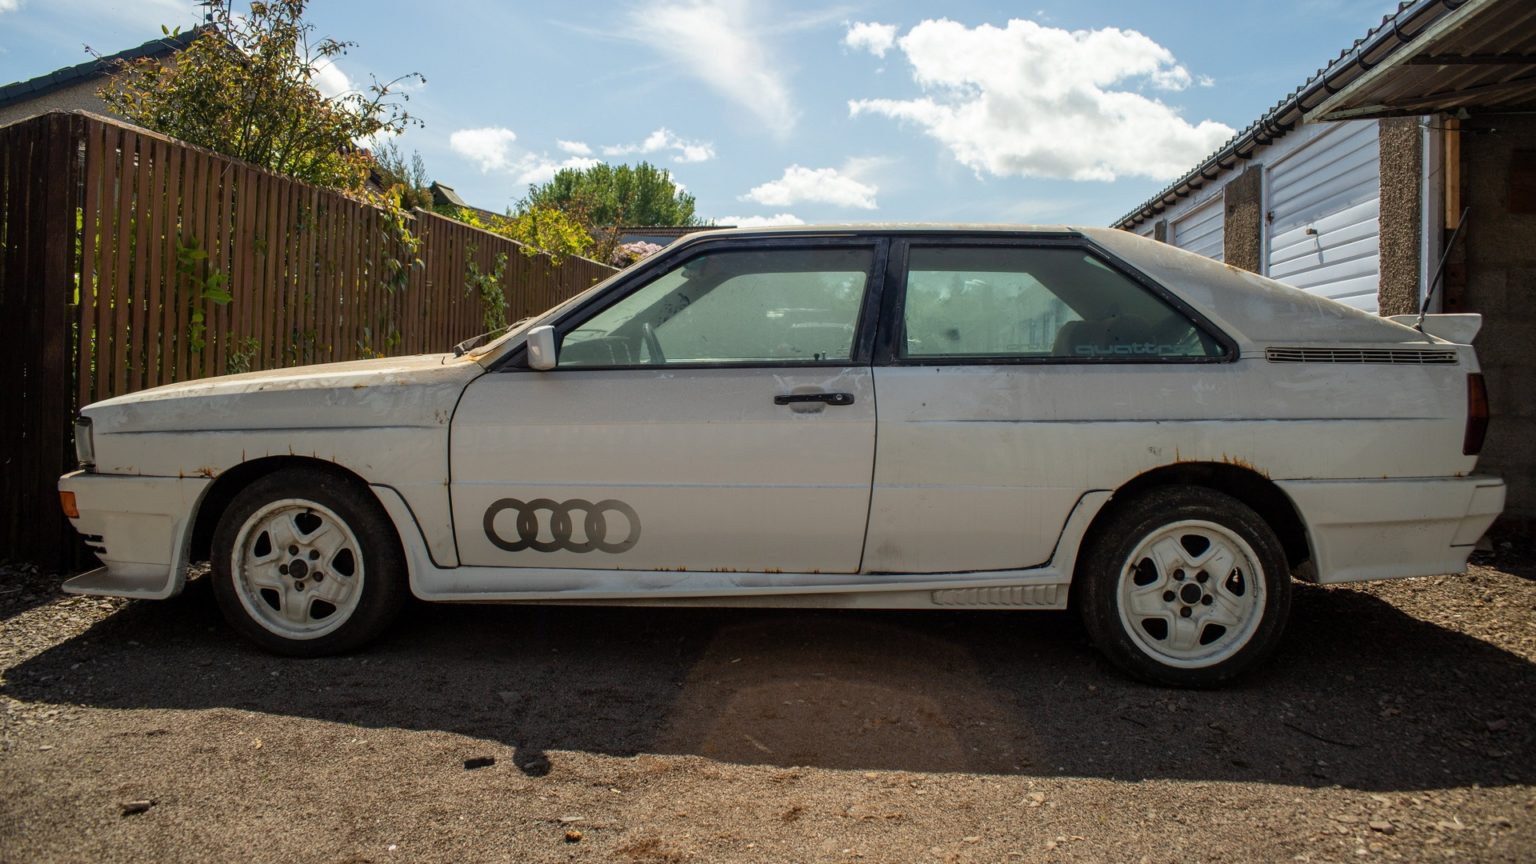 1982 Audi Quattro Turbo barn find 5 1536x864 1